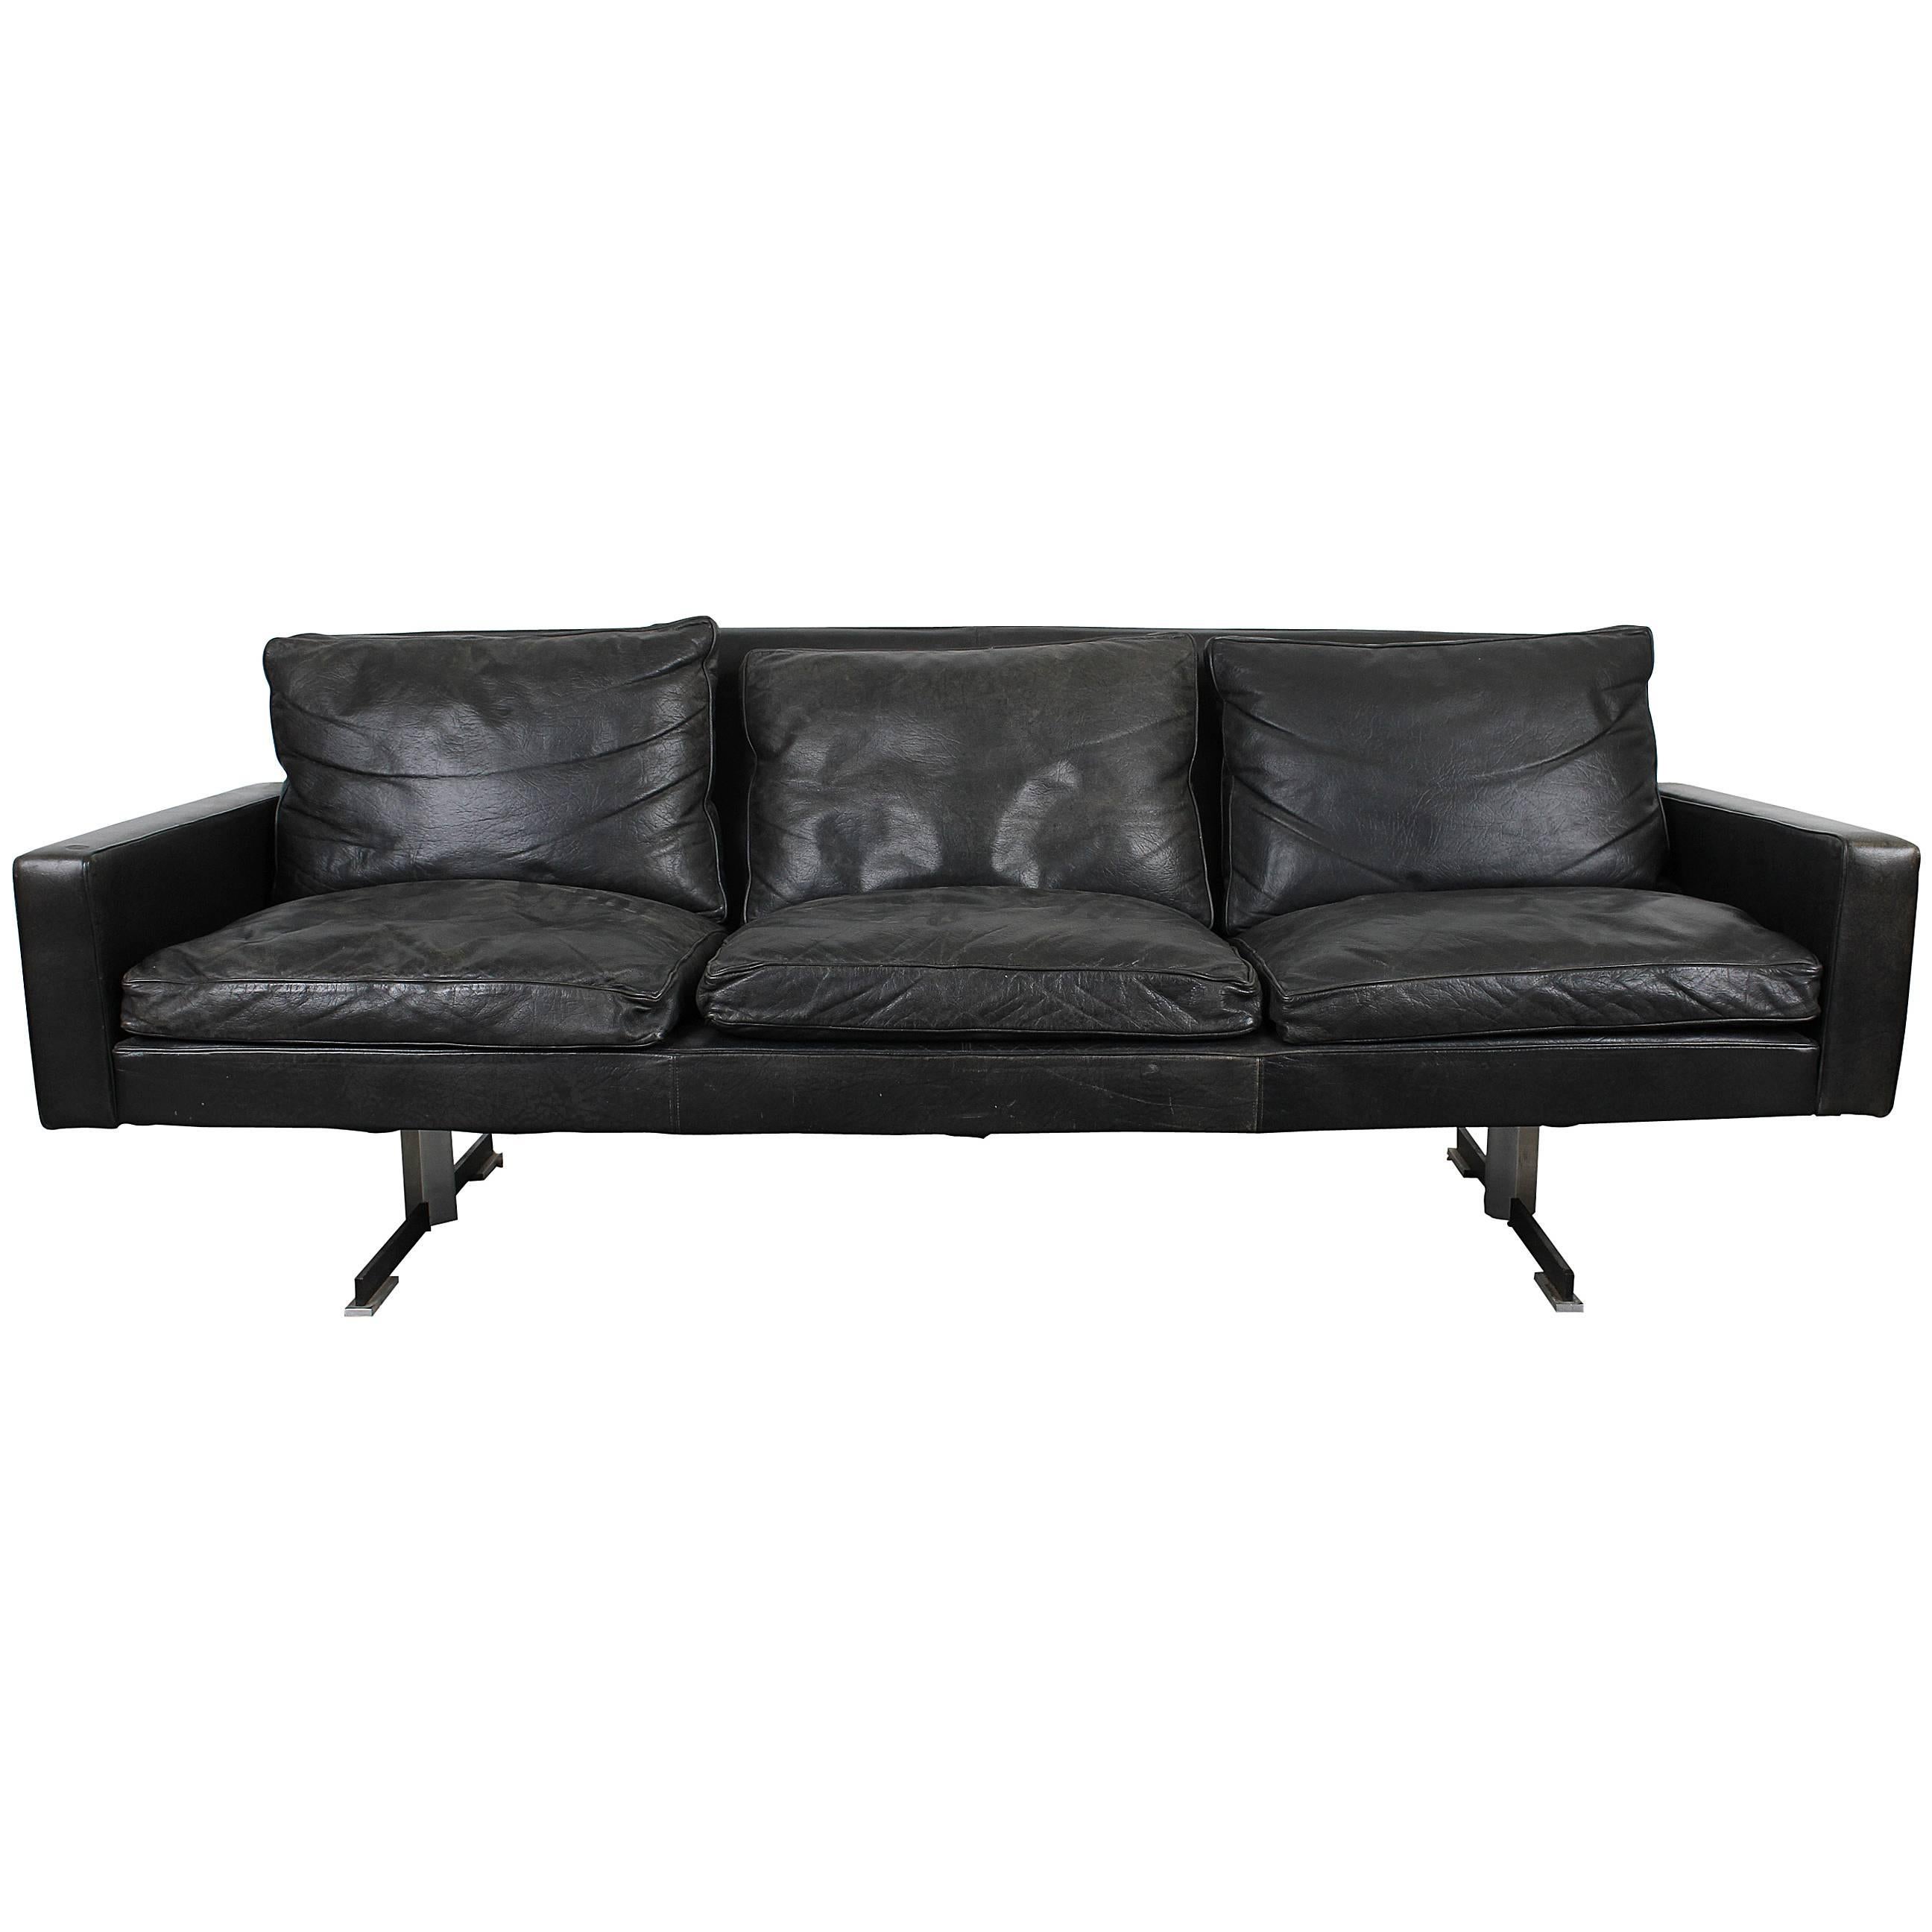 Mid-Century Modern Black Leather Sofa with Chrome Legs